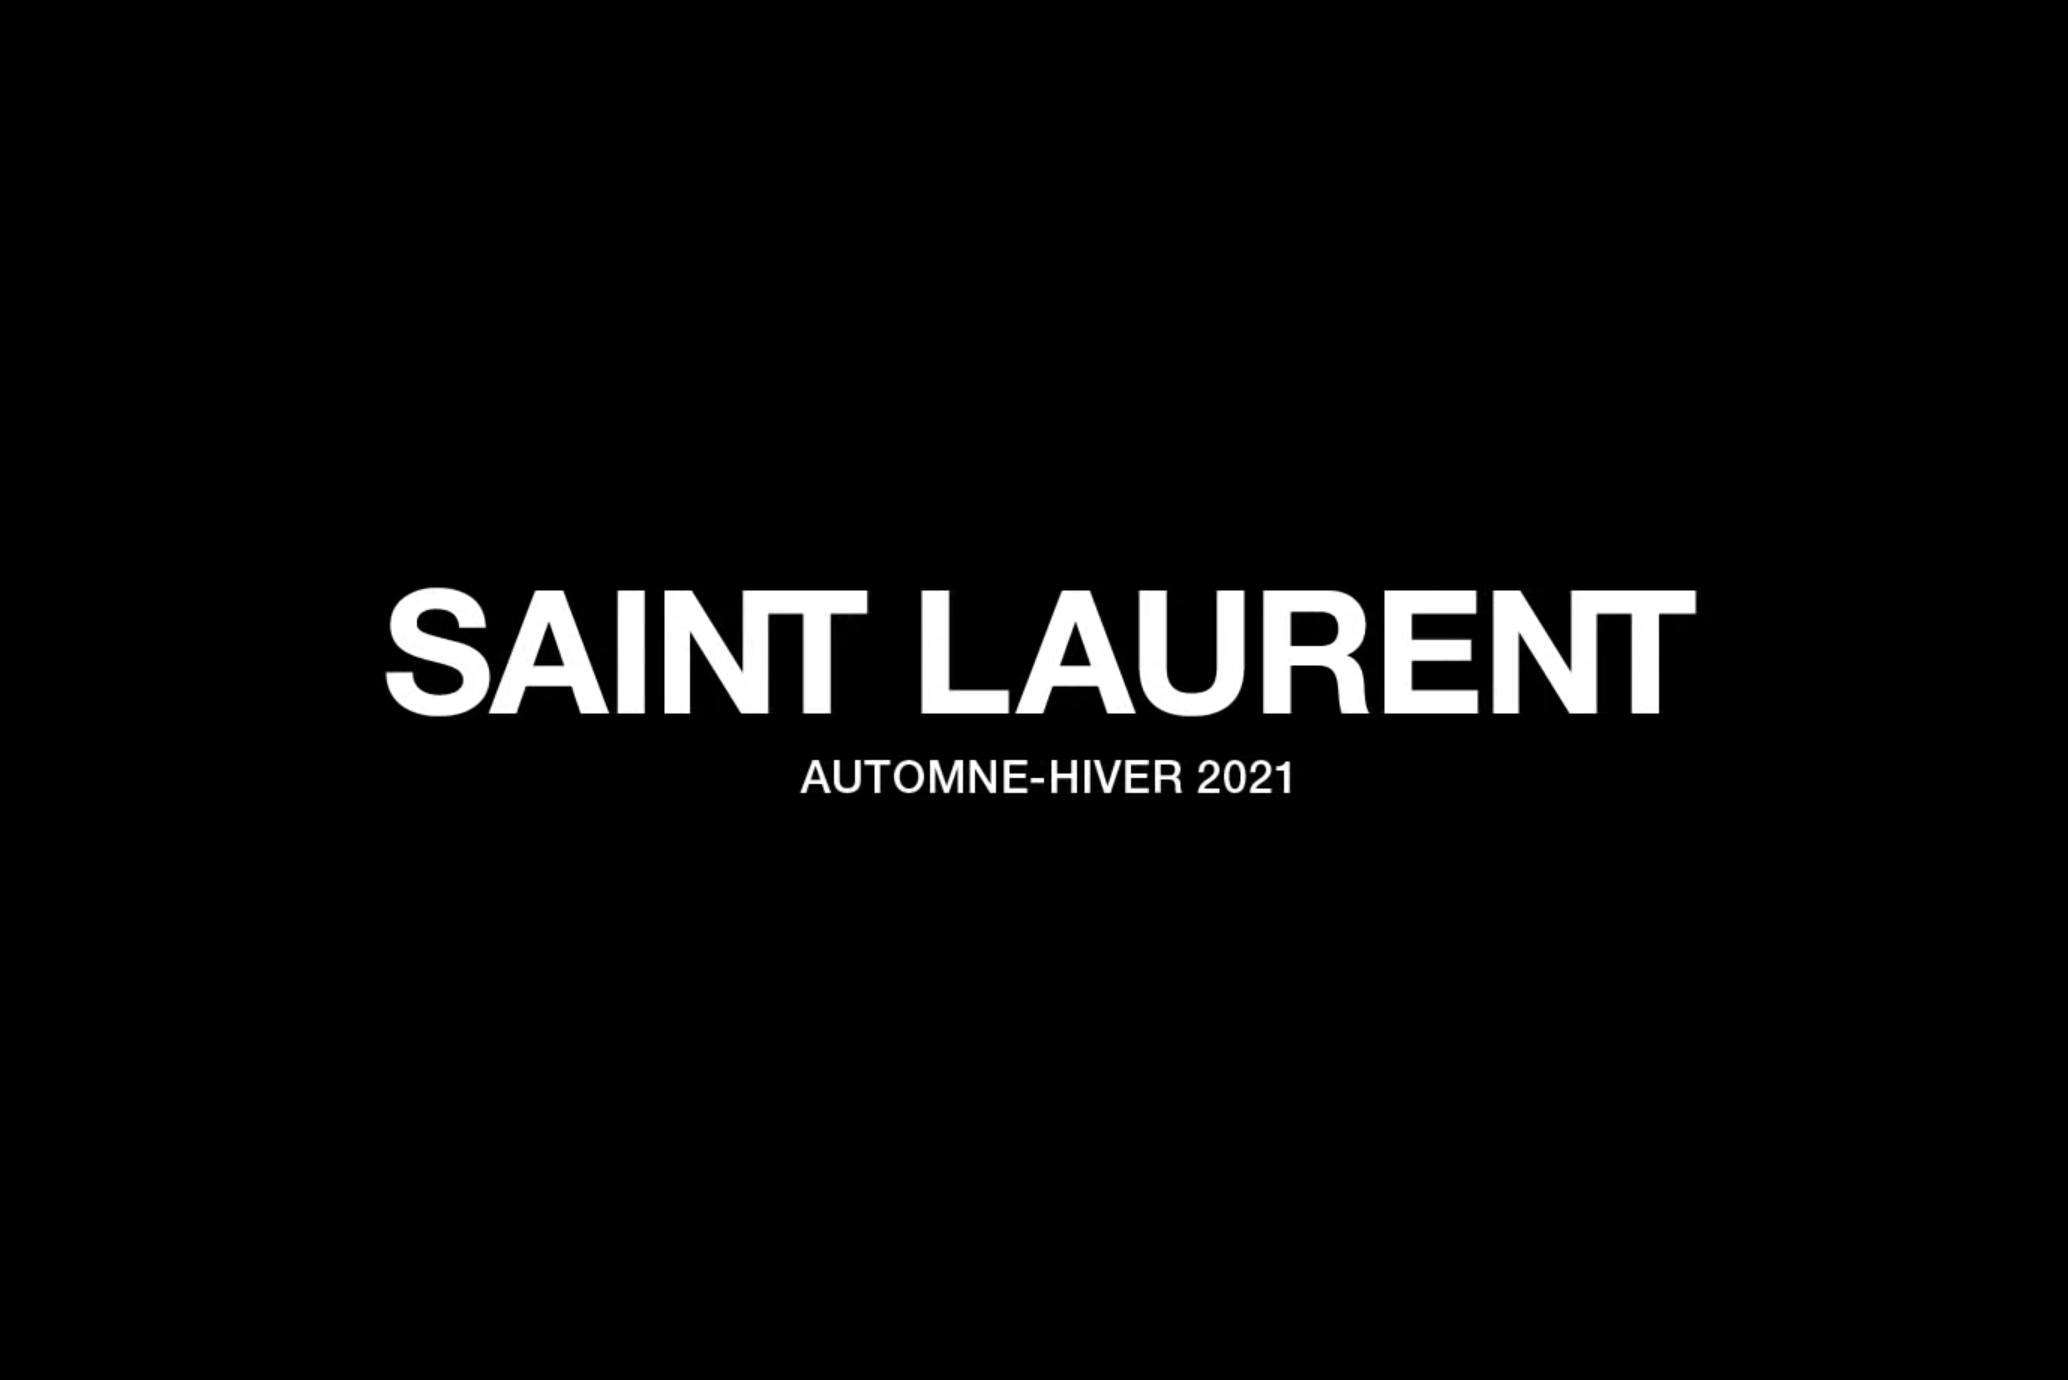 Watch: Saint Laurent's 